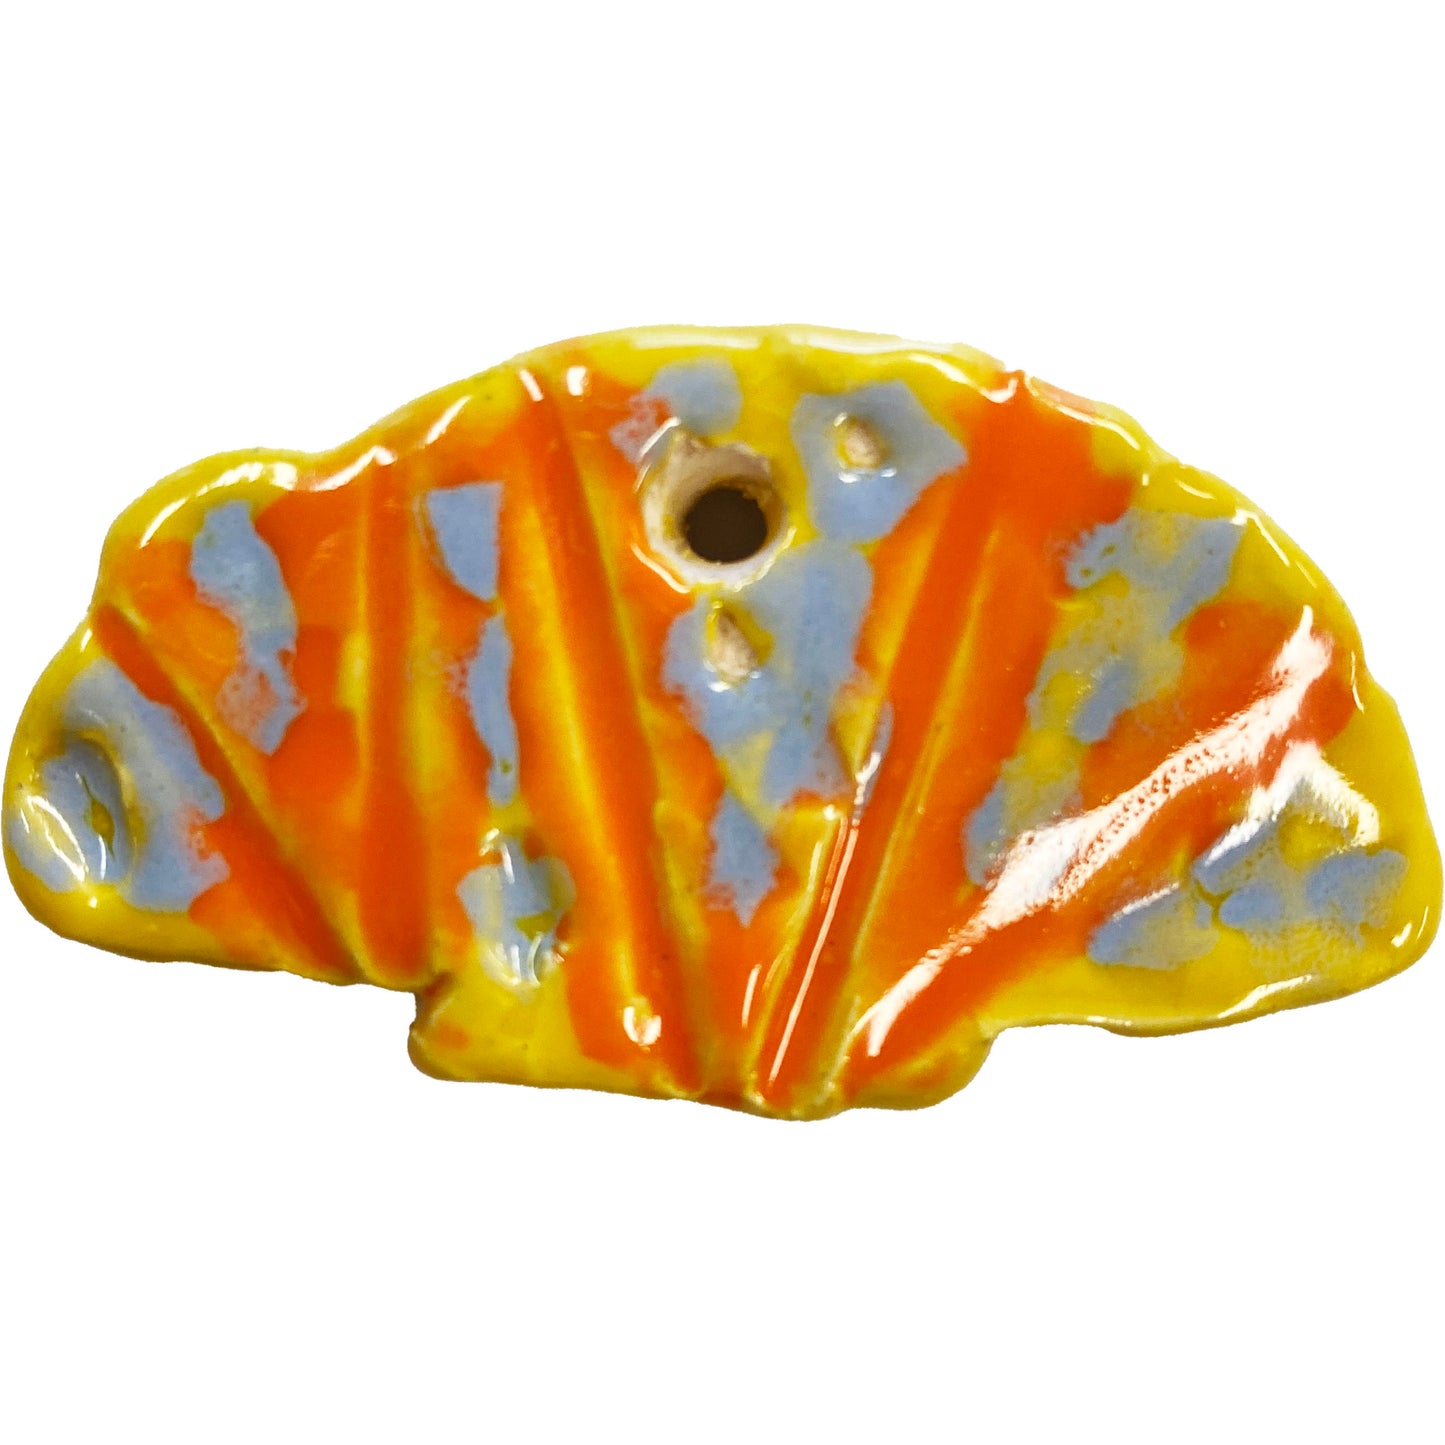 Ceramic Arts Handmade Clay Crafts Fresh Fish Glazed Shell 2.5-inch x 1.5-inch made by Tami Mills